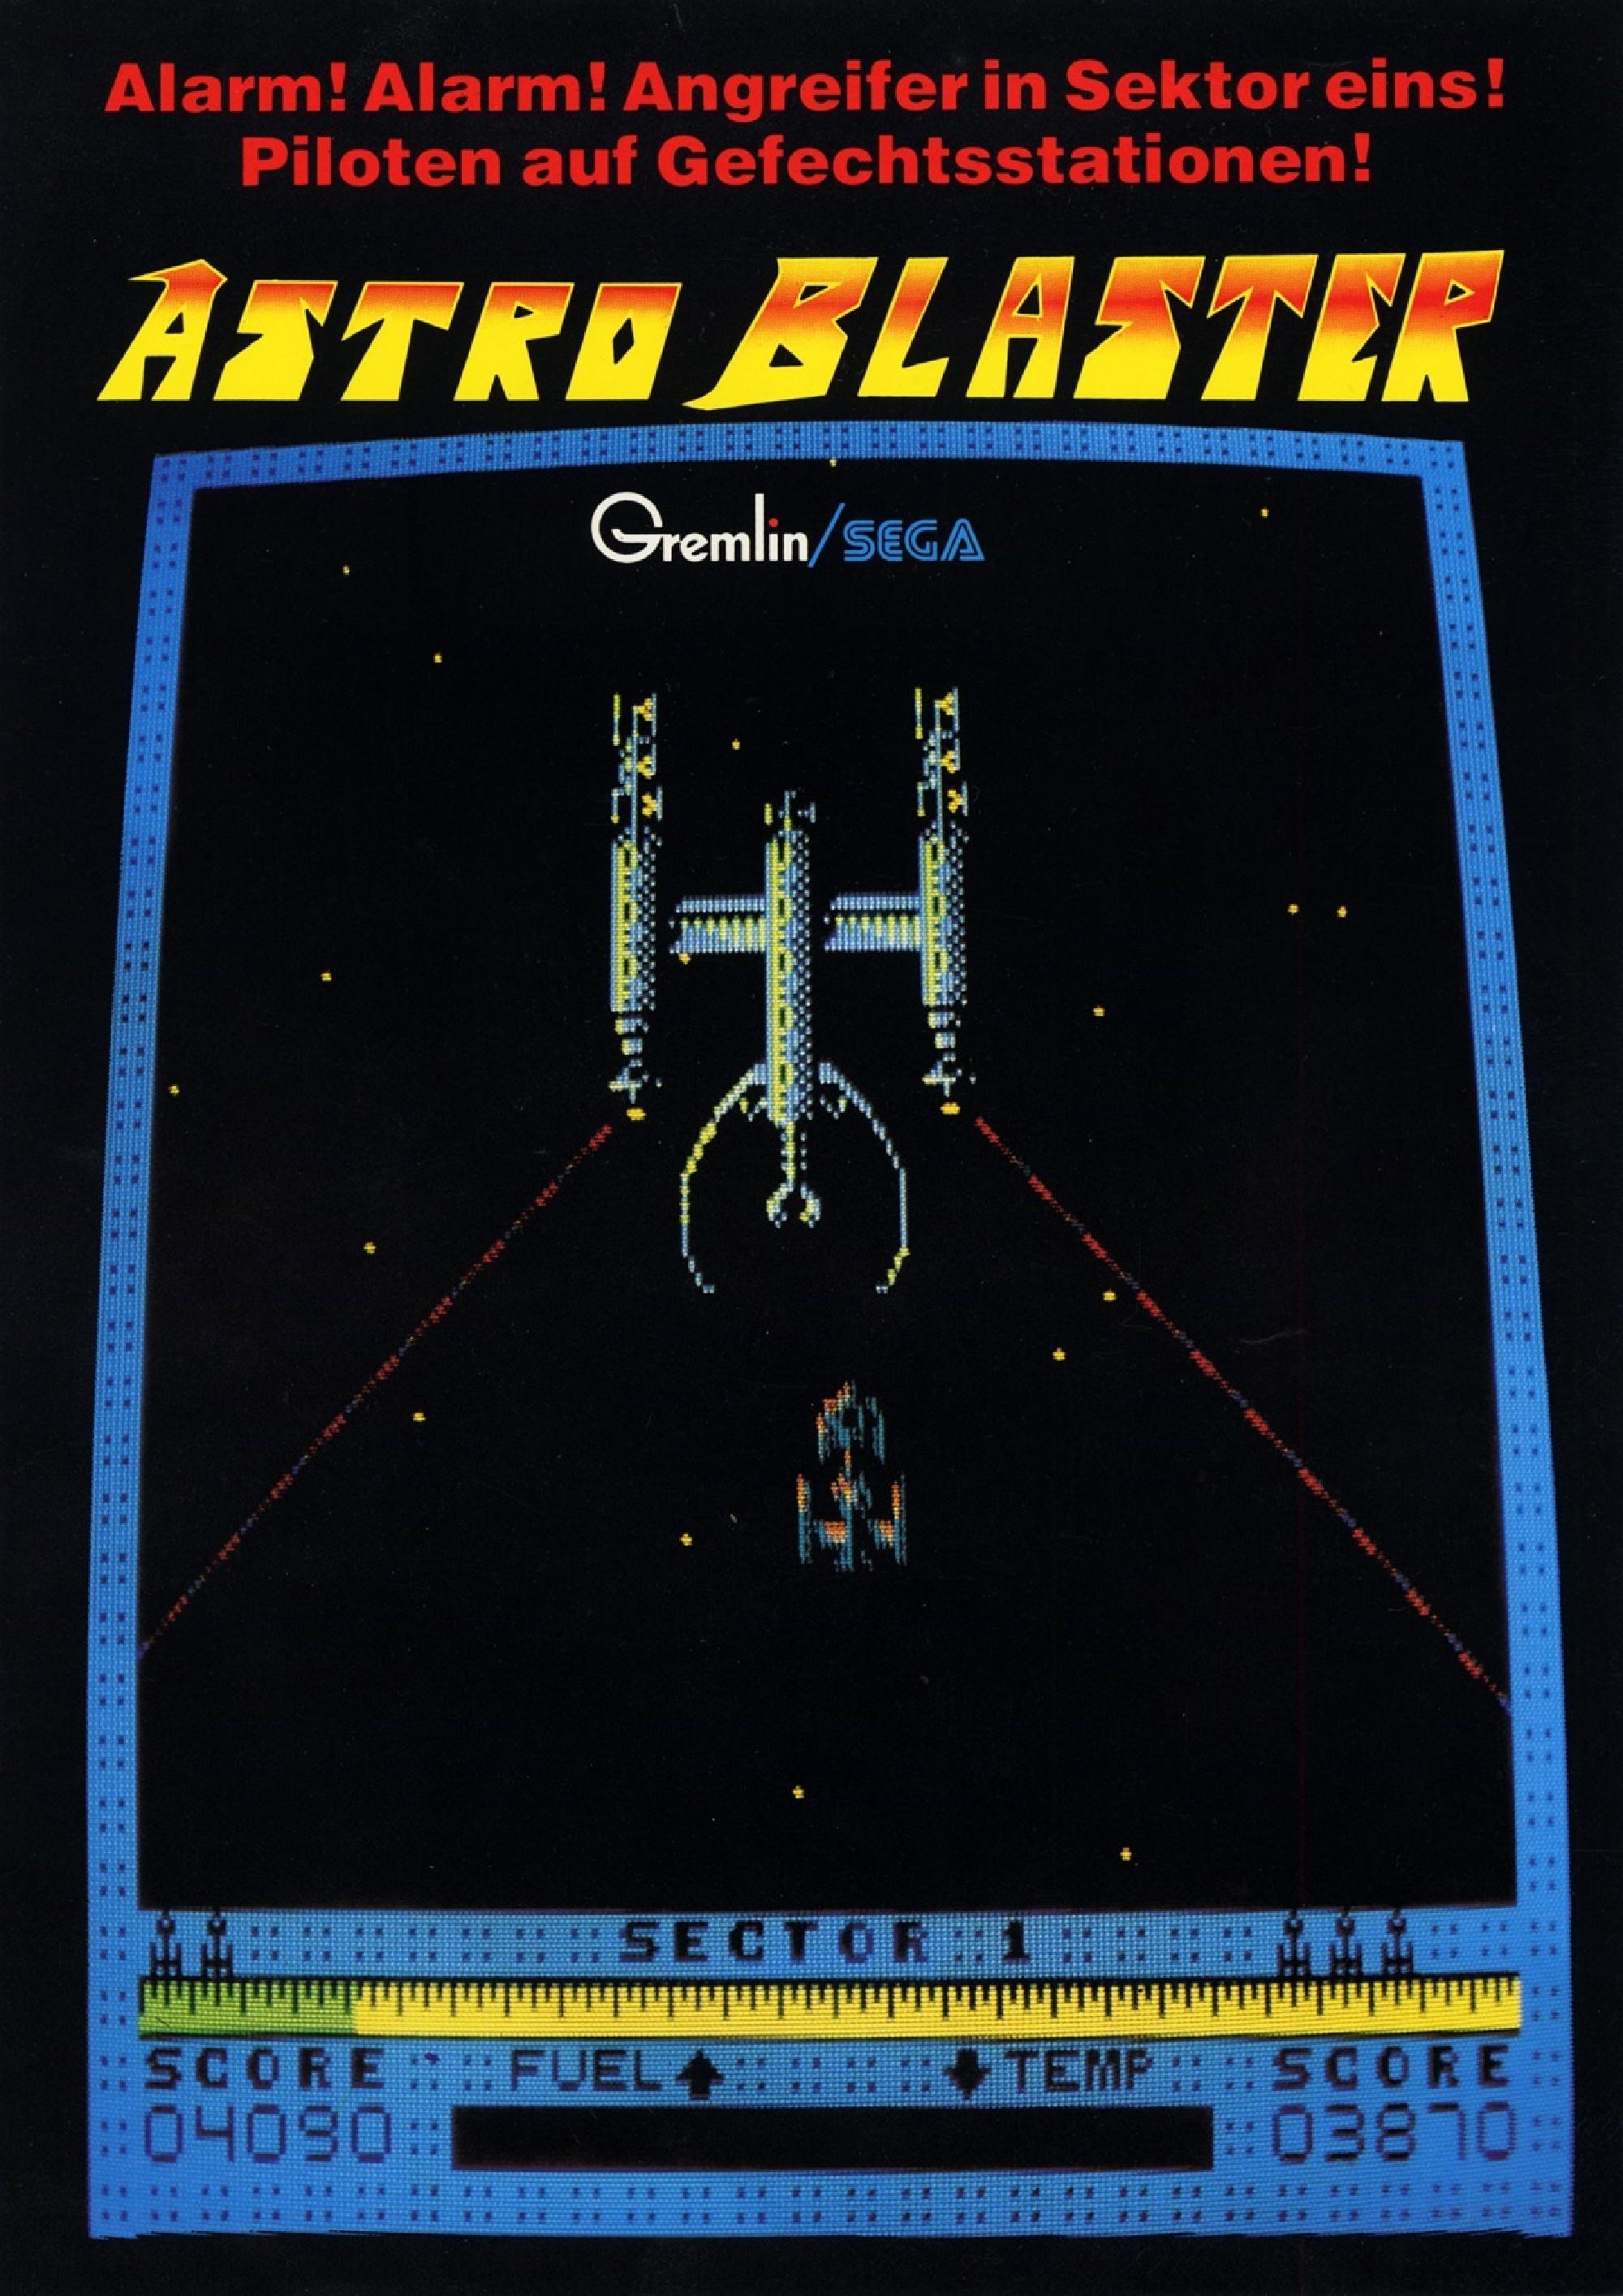 AstroBlaster G80 DE Flyer.pdf